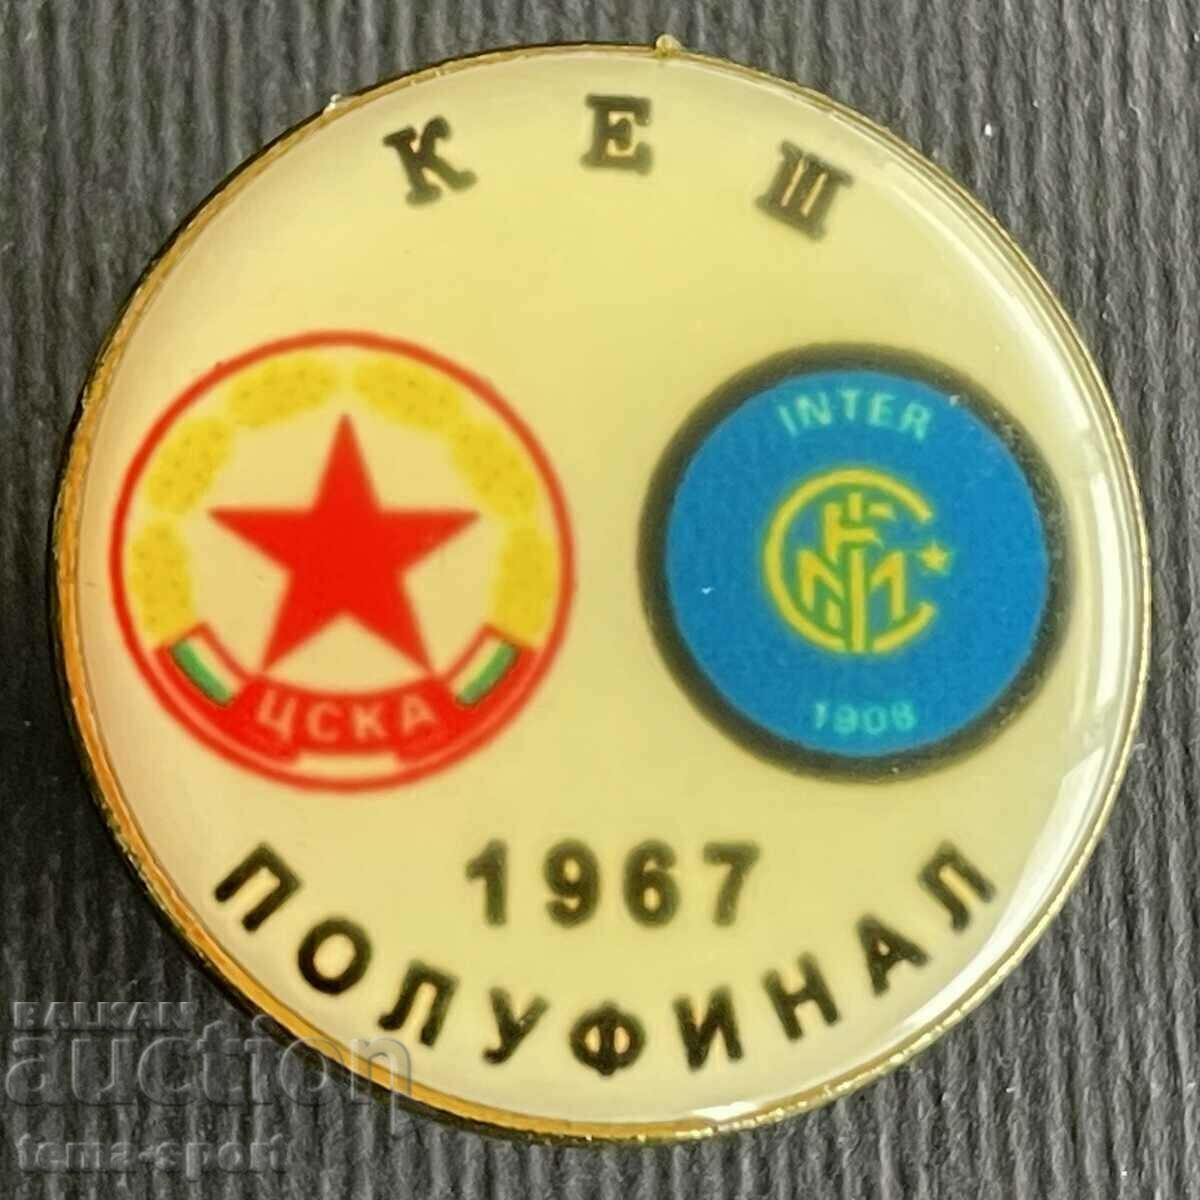 371 България знак футболен клуб ЦСКА Интер 1967г.